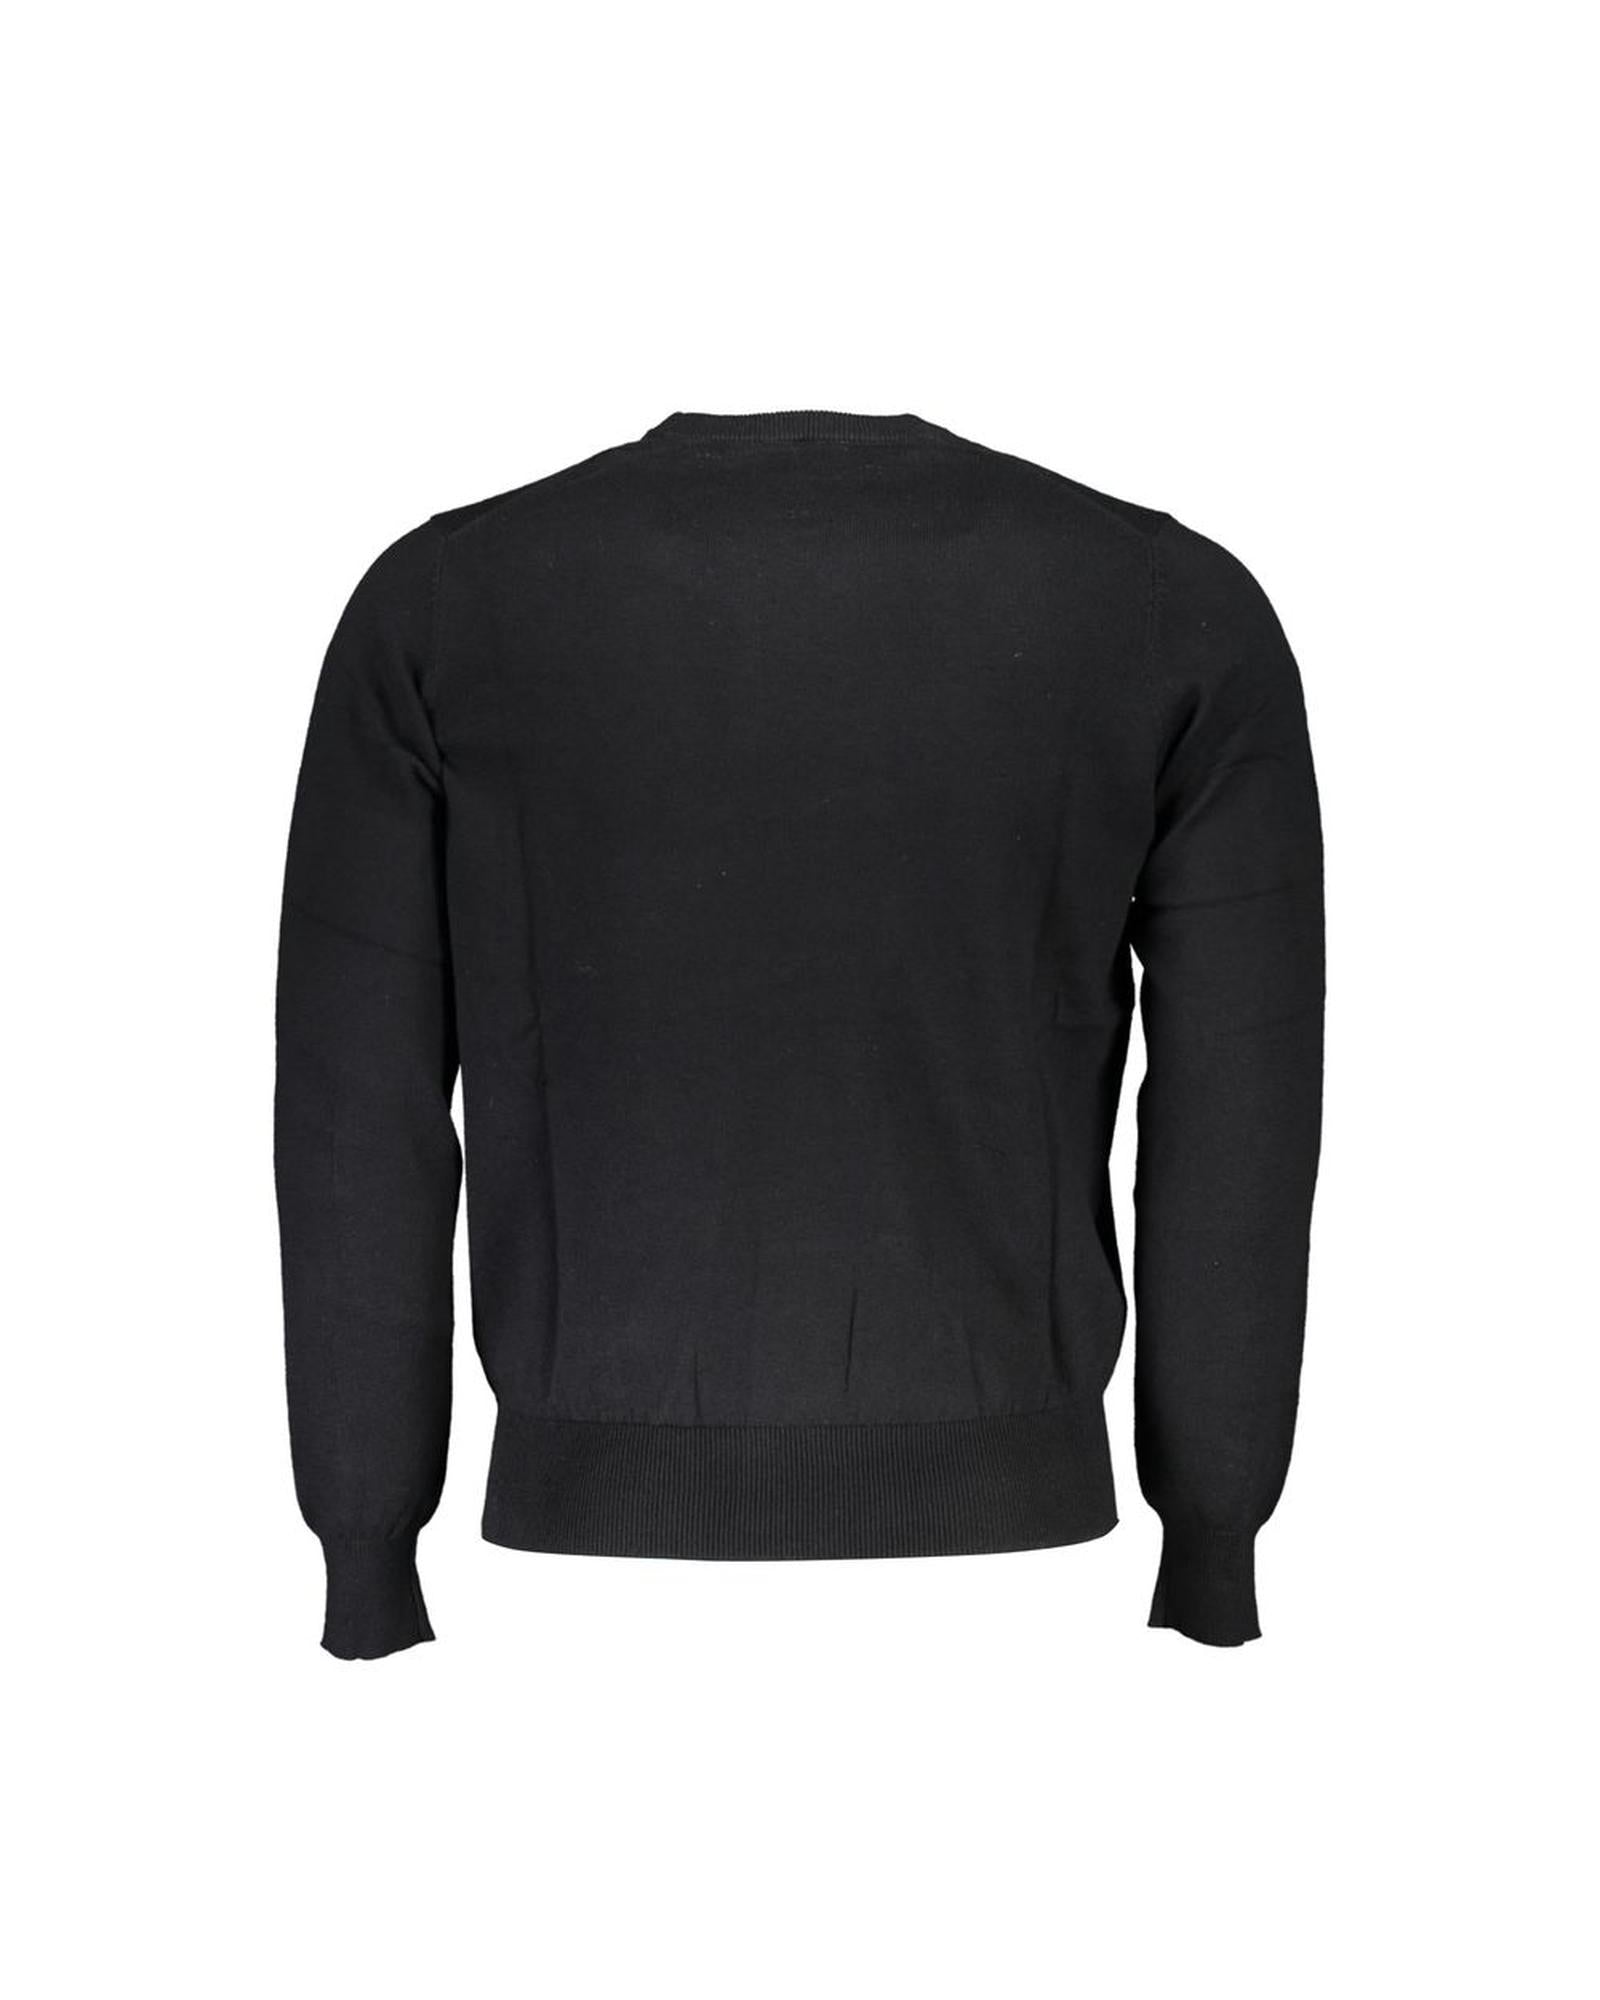 Men's Black Fabric Shirt - M